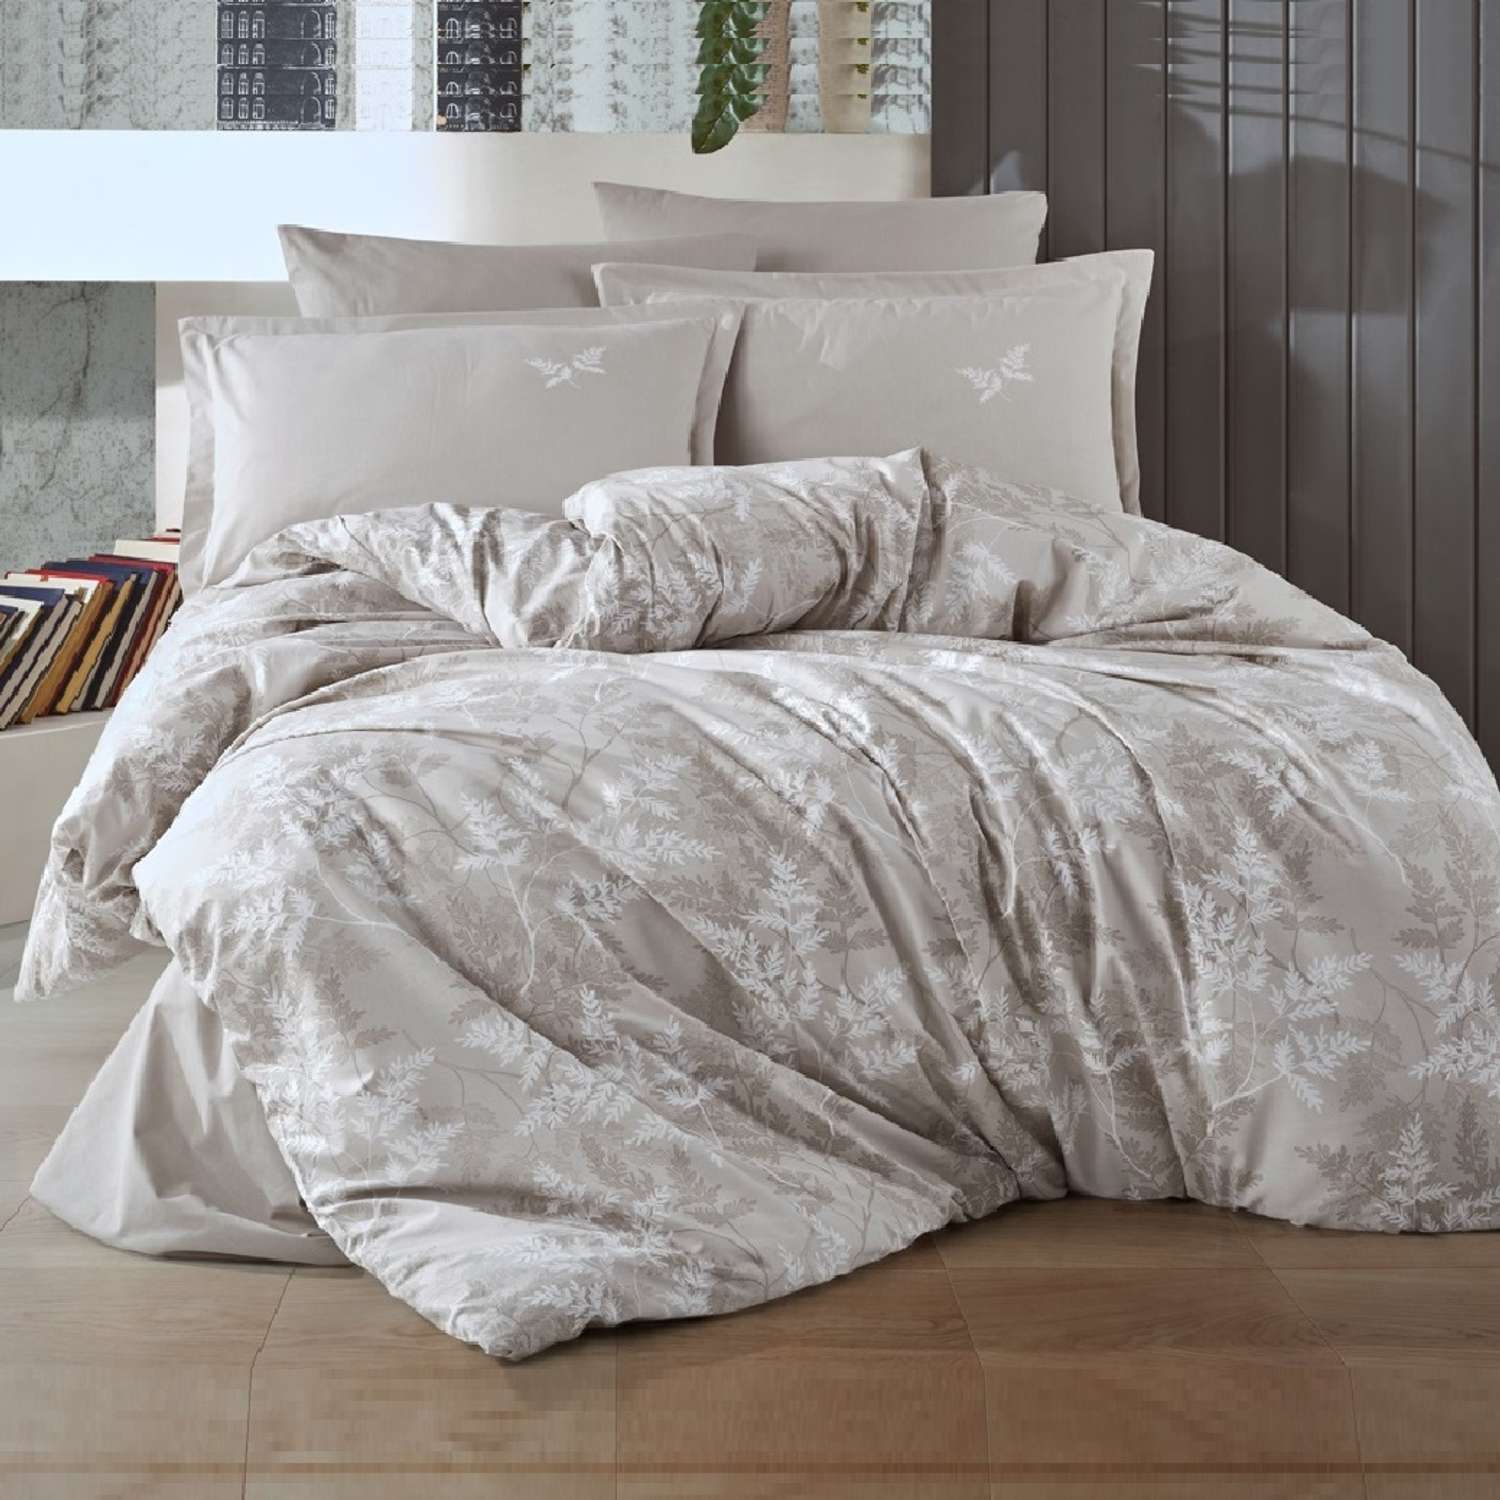 Комплект постельного белья ATLASPLUS размер ЕВРО ранфорс хлопок наволочки 50х70 см - фото 2